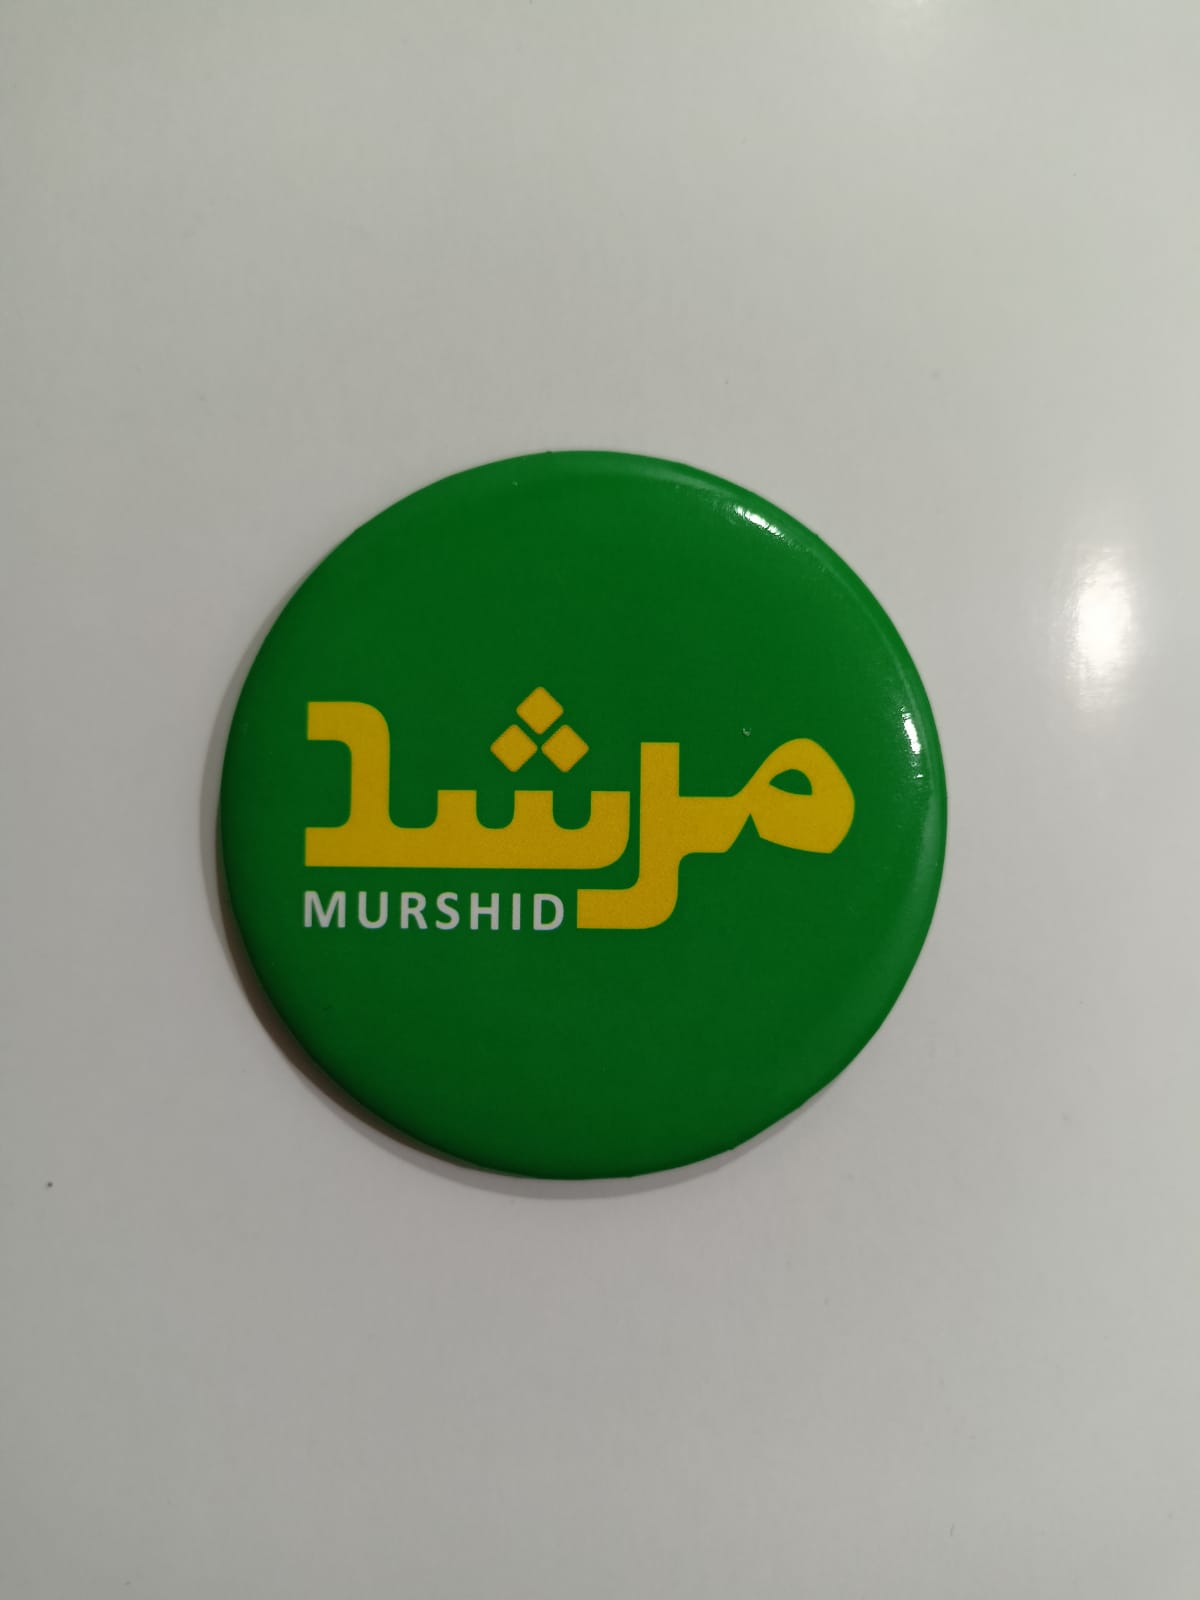 Murshid